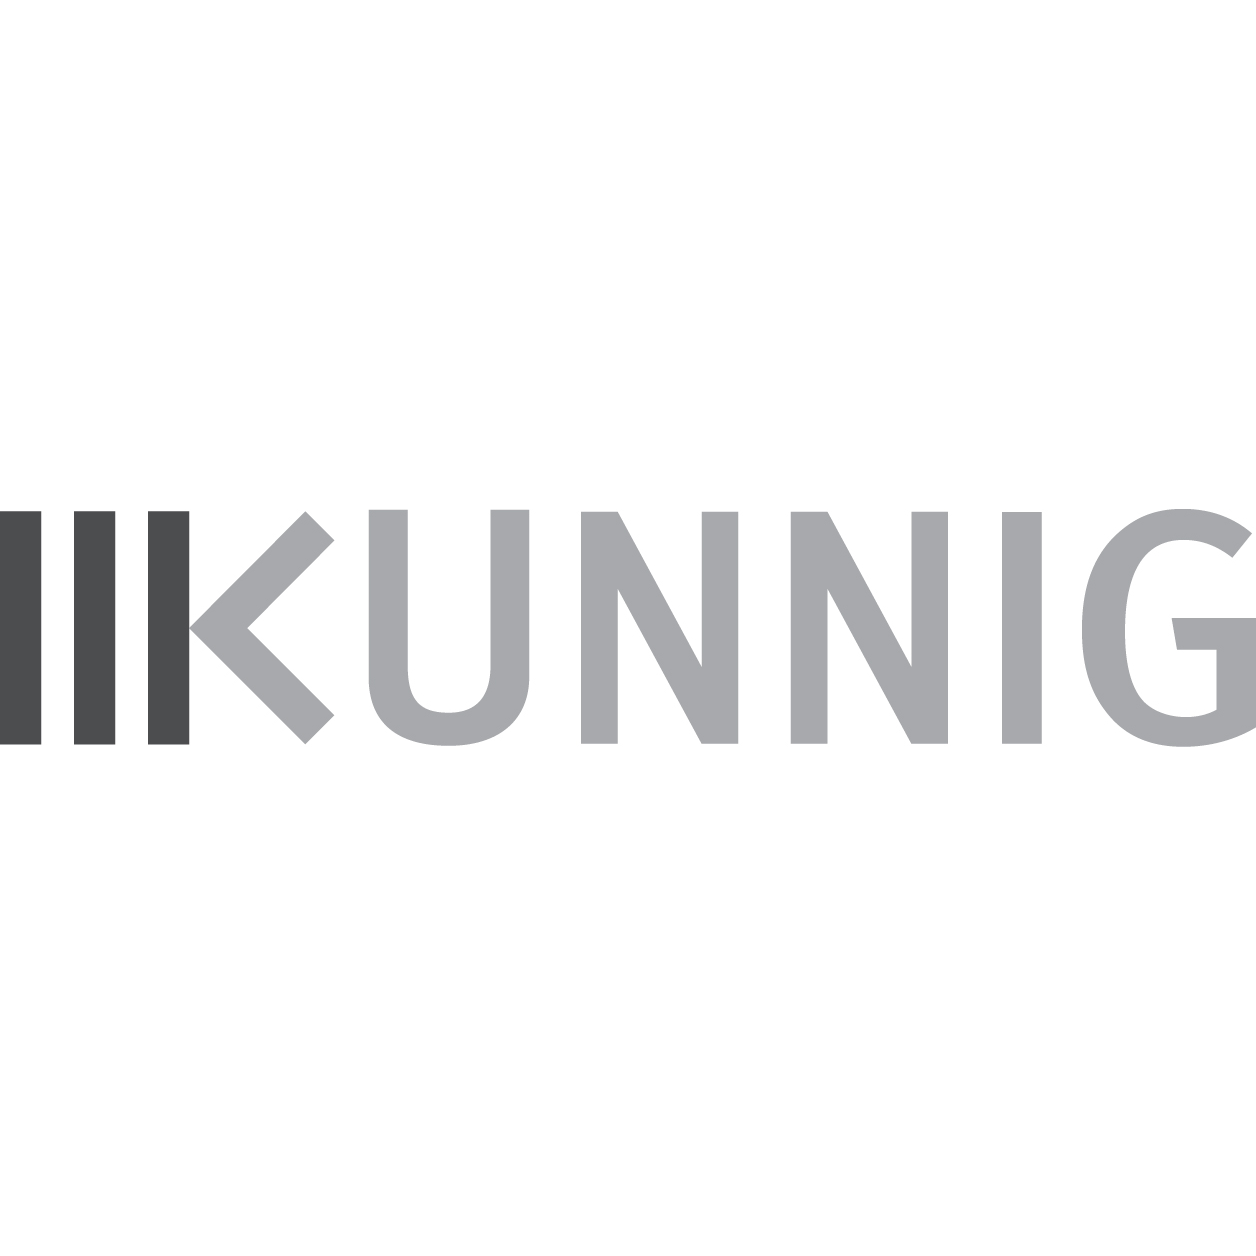 KUNNIG logo